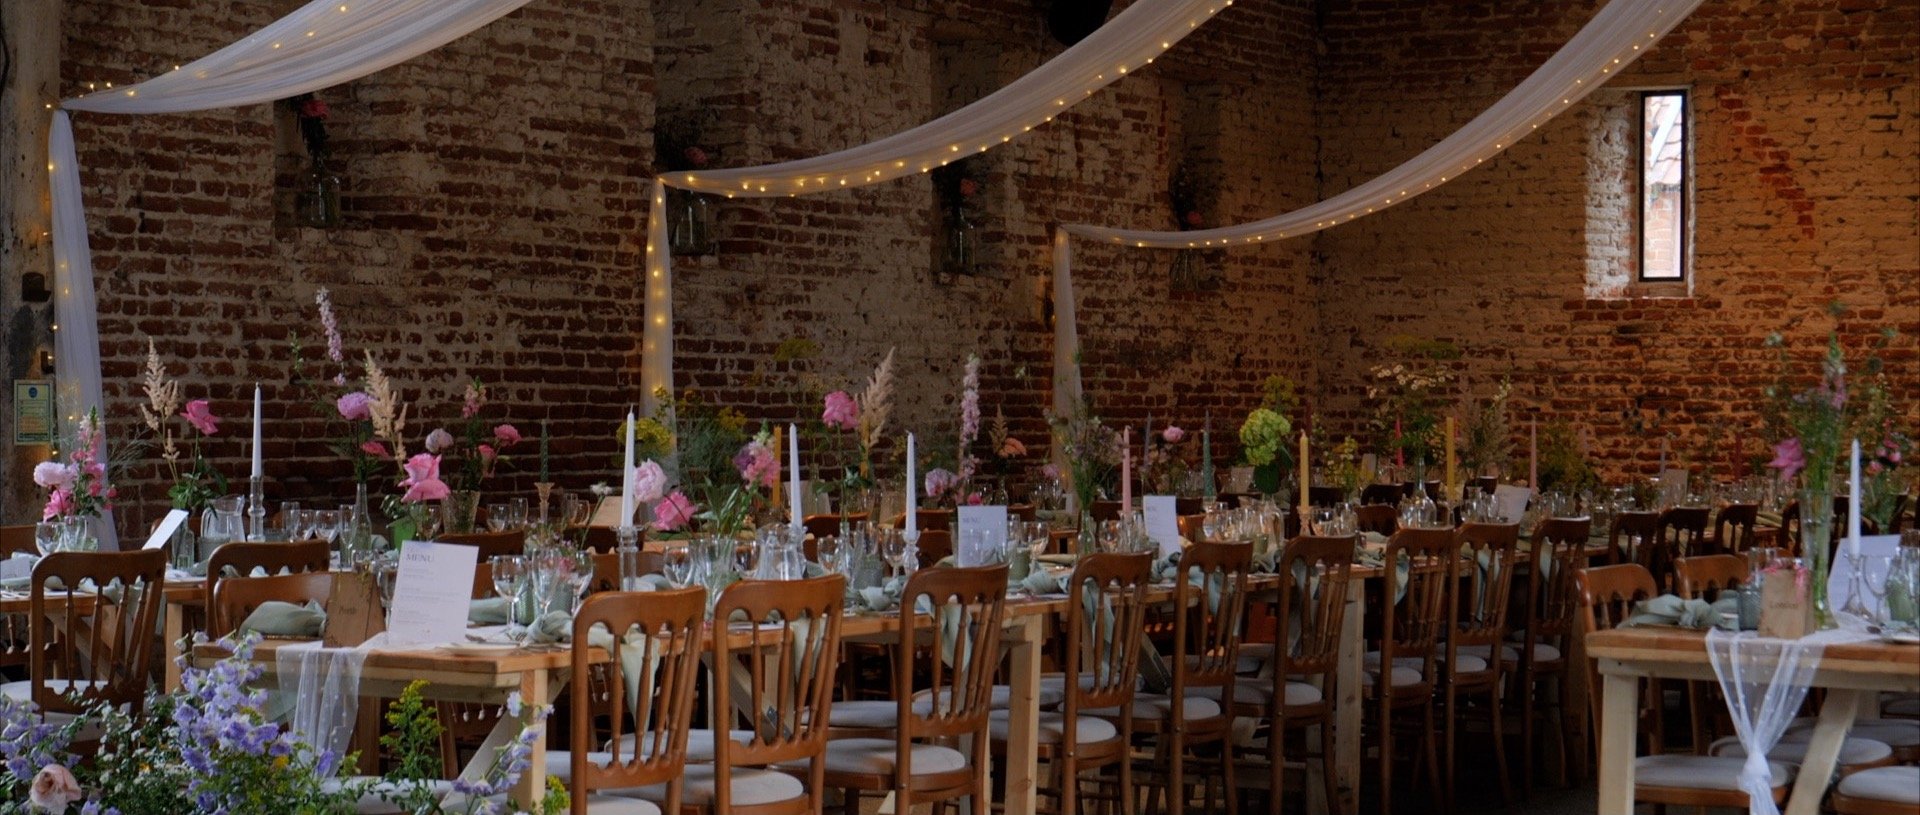 Great Lodge wedding venue - Wedding breakfast barn - beautiful video - 3 Cheers Media.jpg